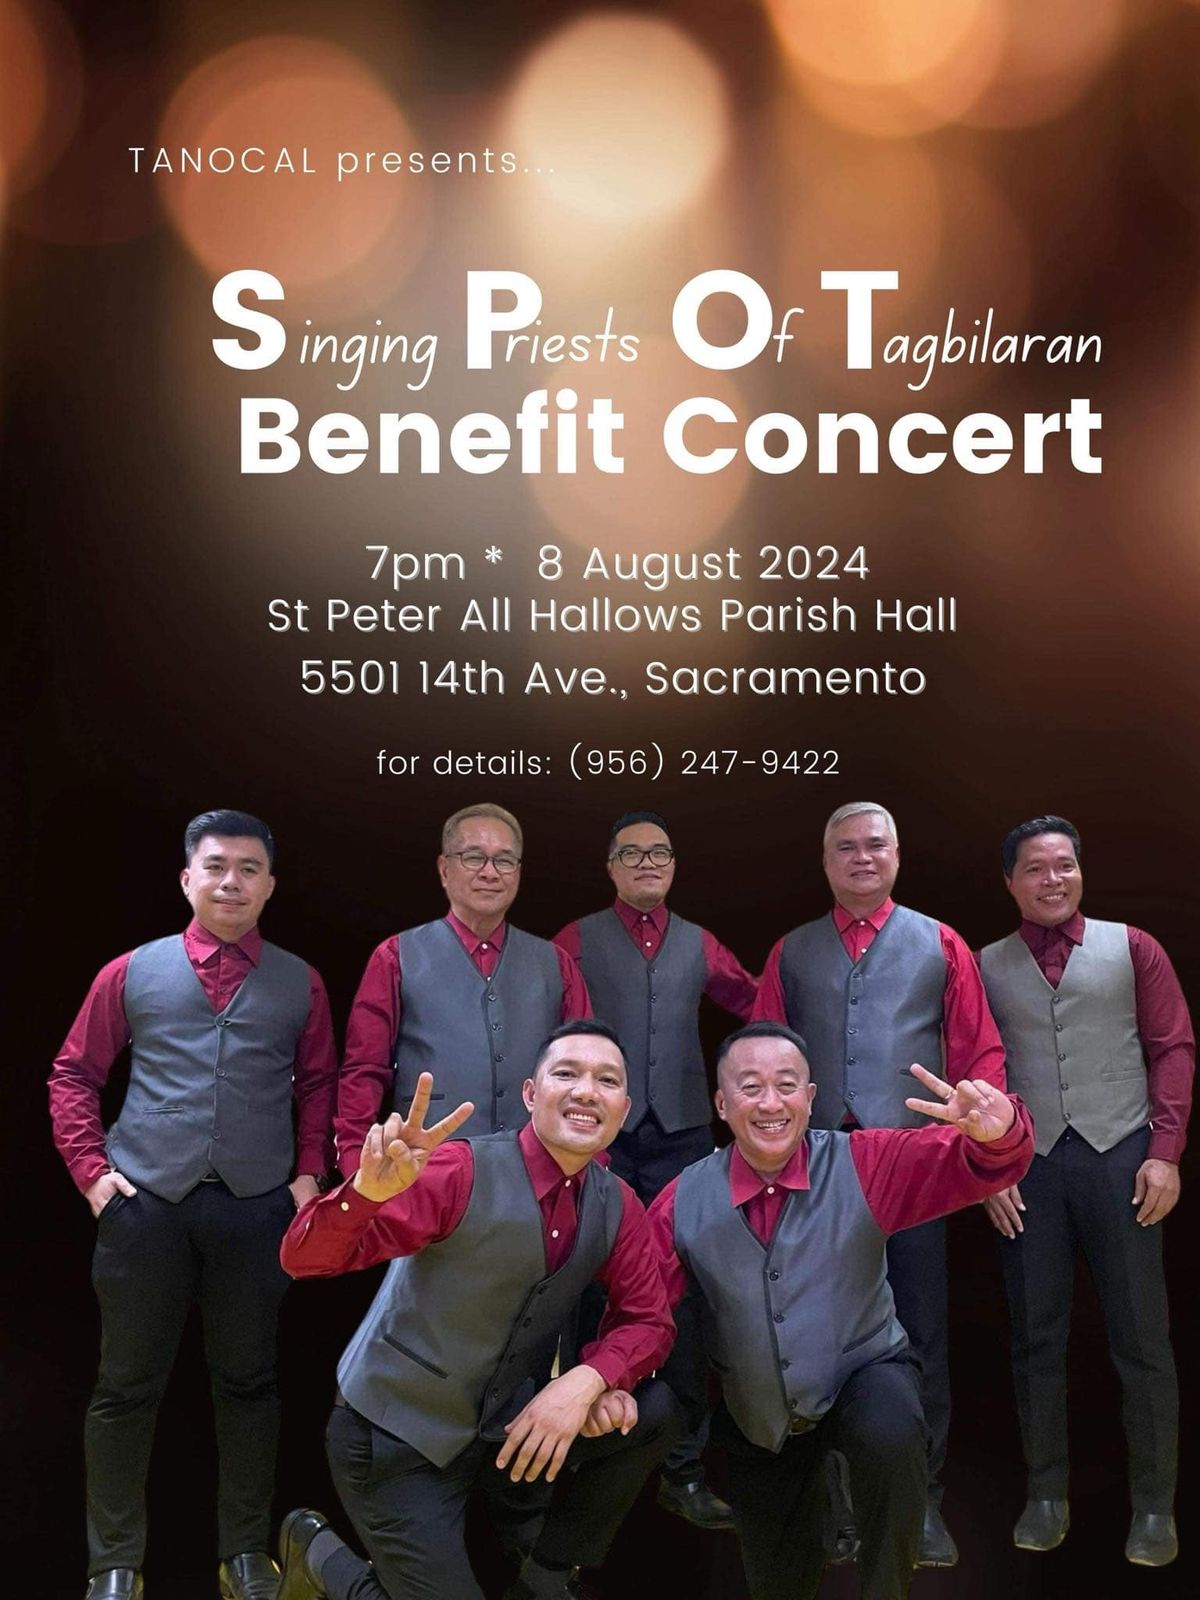 TANOCAL presents S inging Singing Priests Of OfTag Tagbilaran Benefit Concert